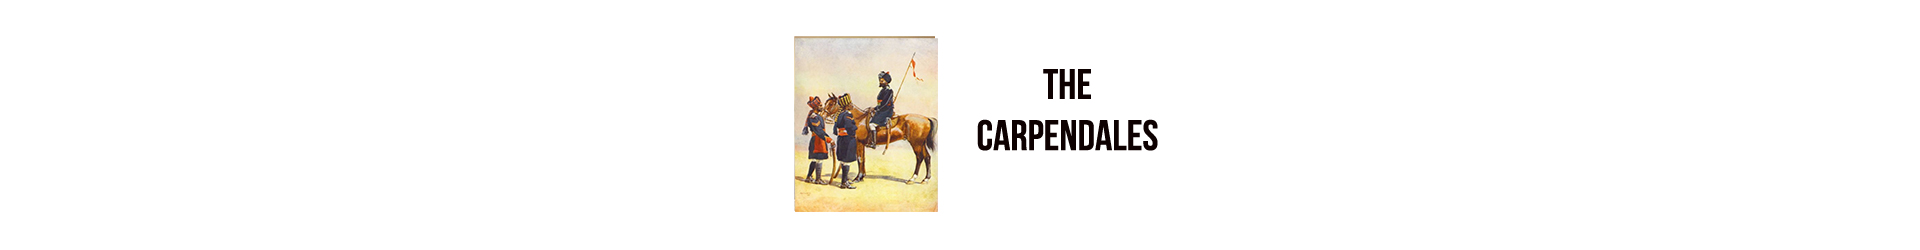 The Carpendales